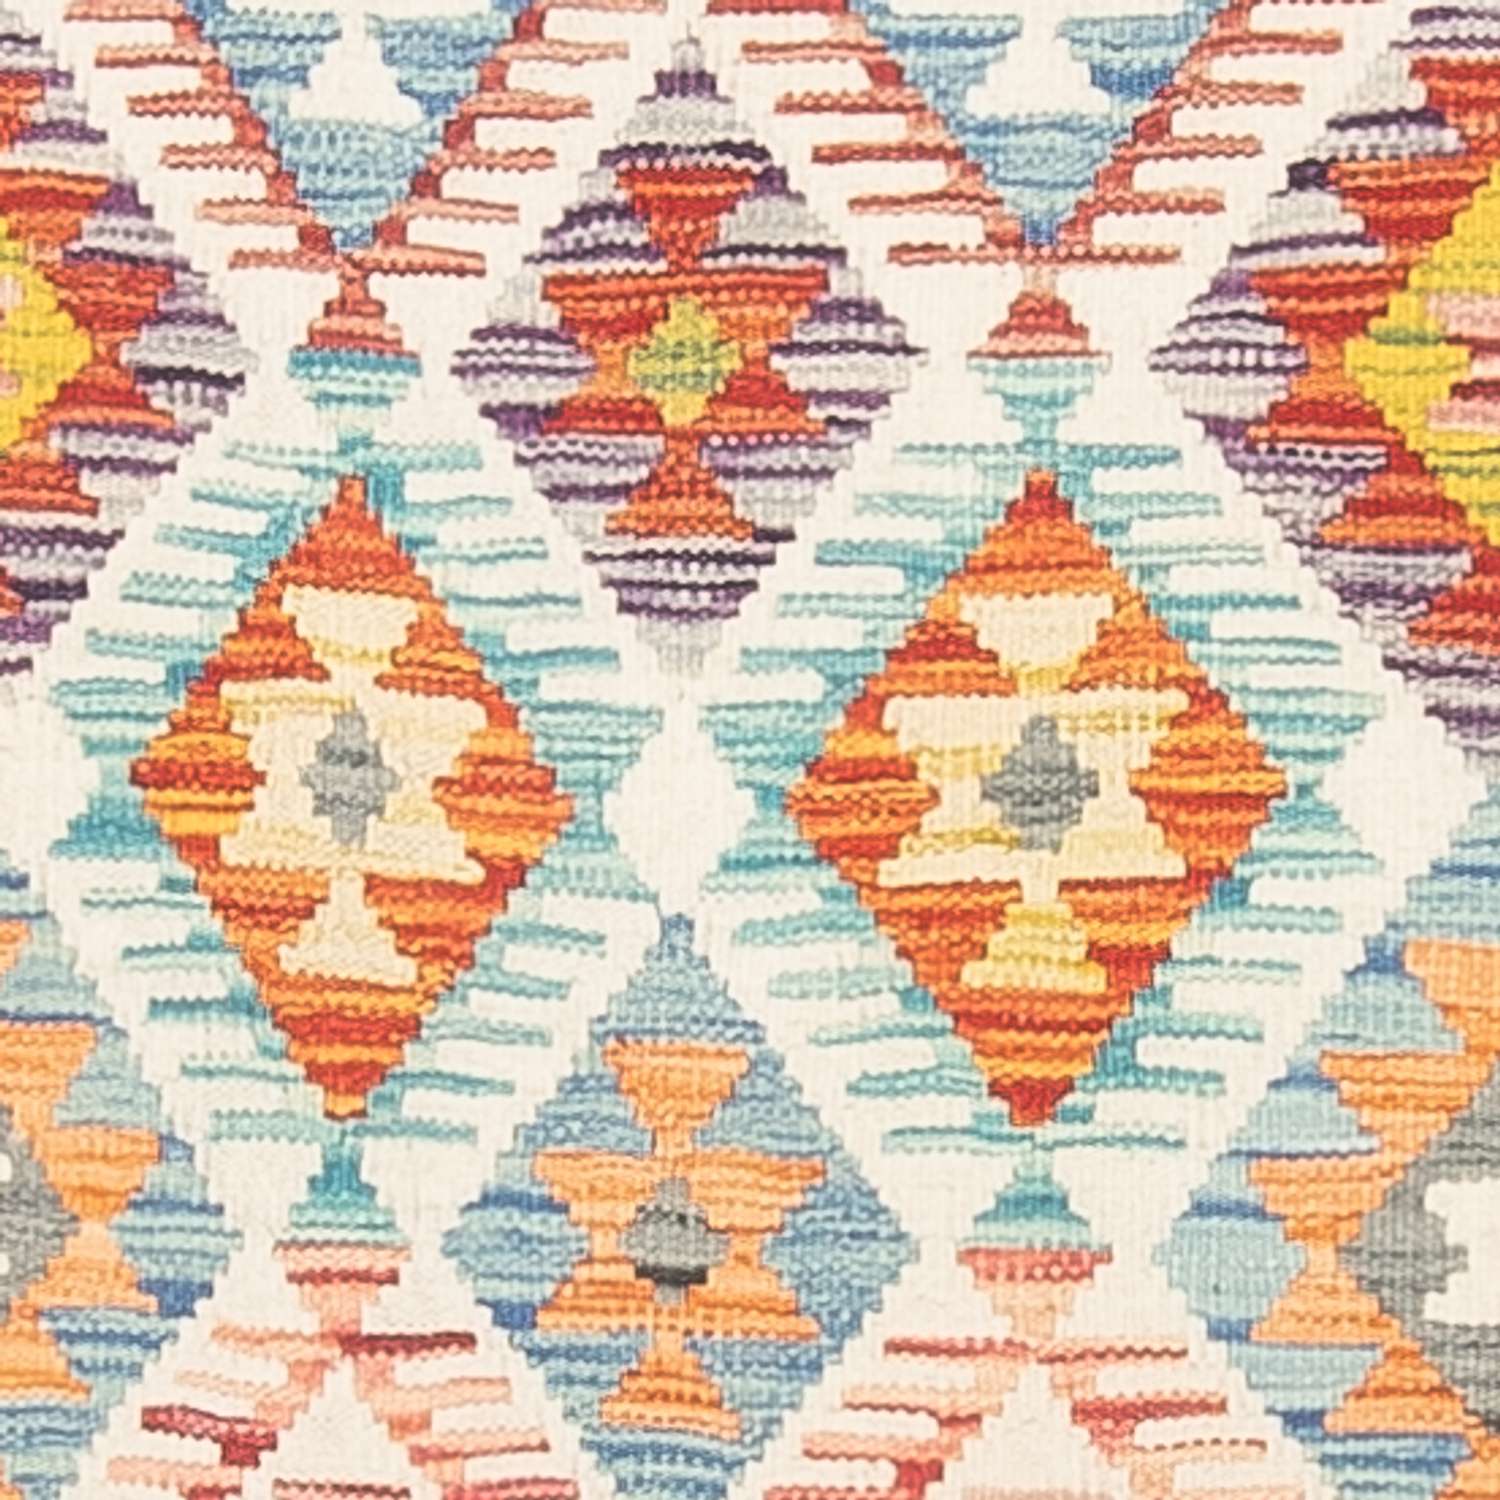 Runner Kelim Carpet - Splash - 297 x 80 cm - flerfärgad